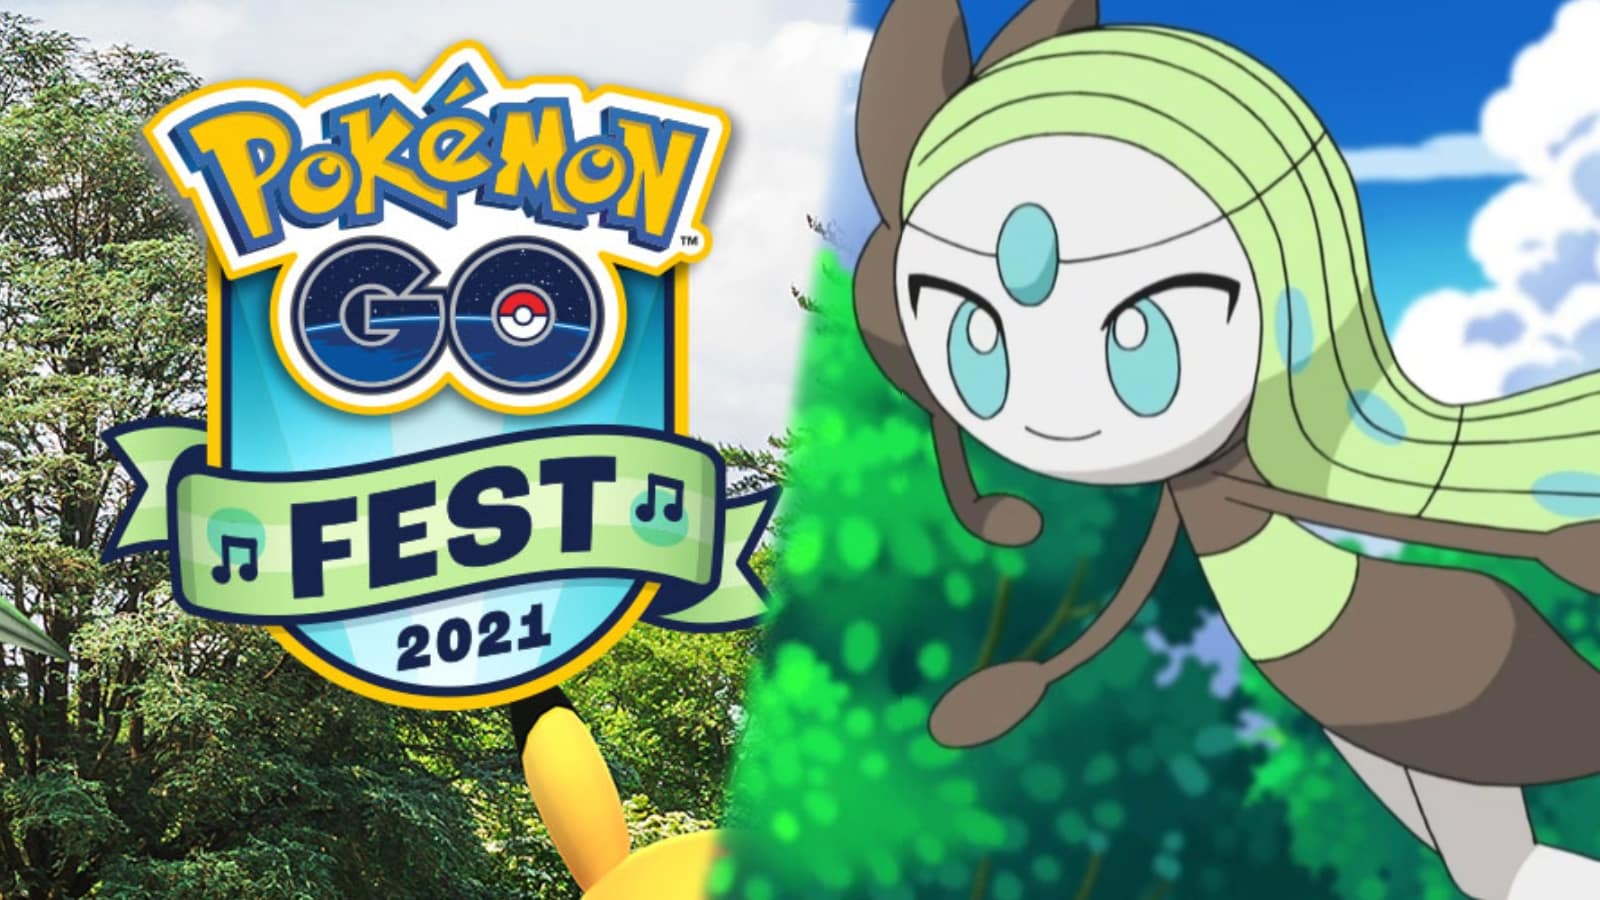 Pokémon Go Fest 2023 details, including new Mythical Pokémon